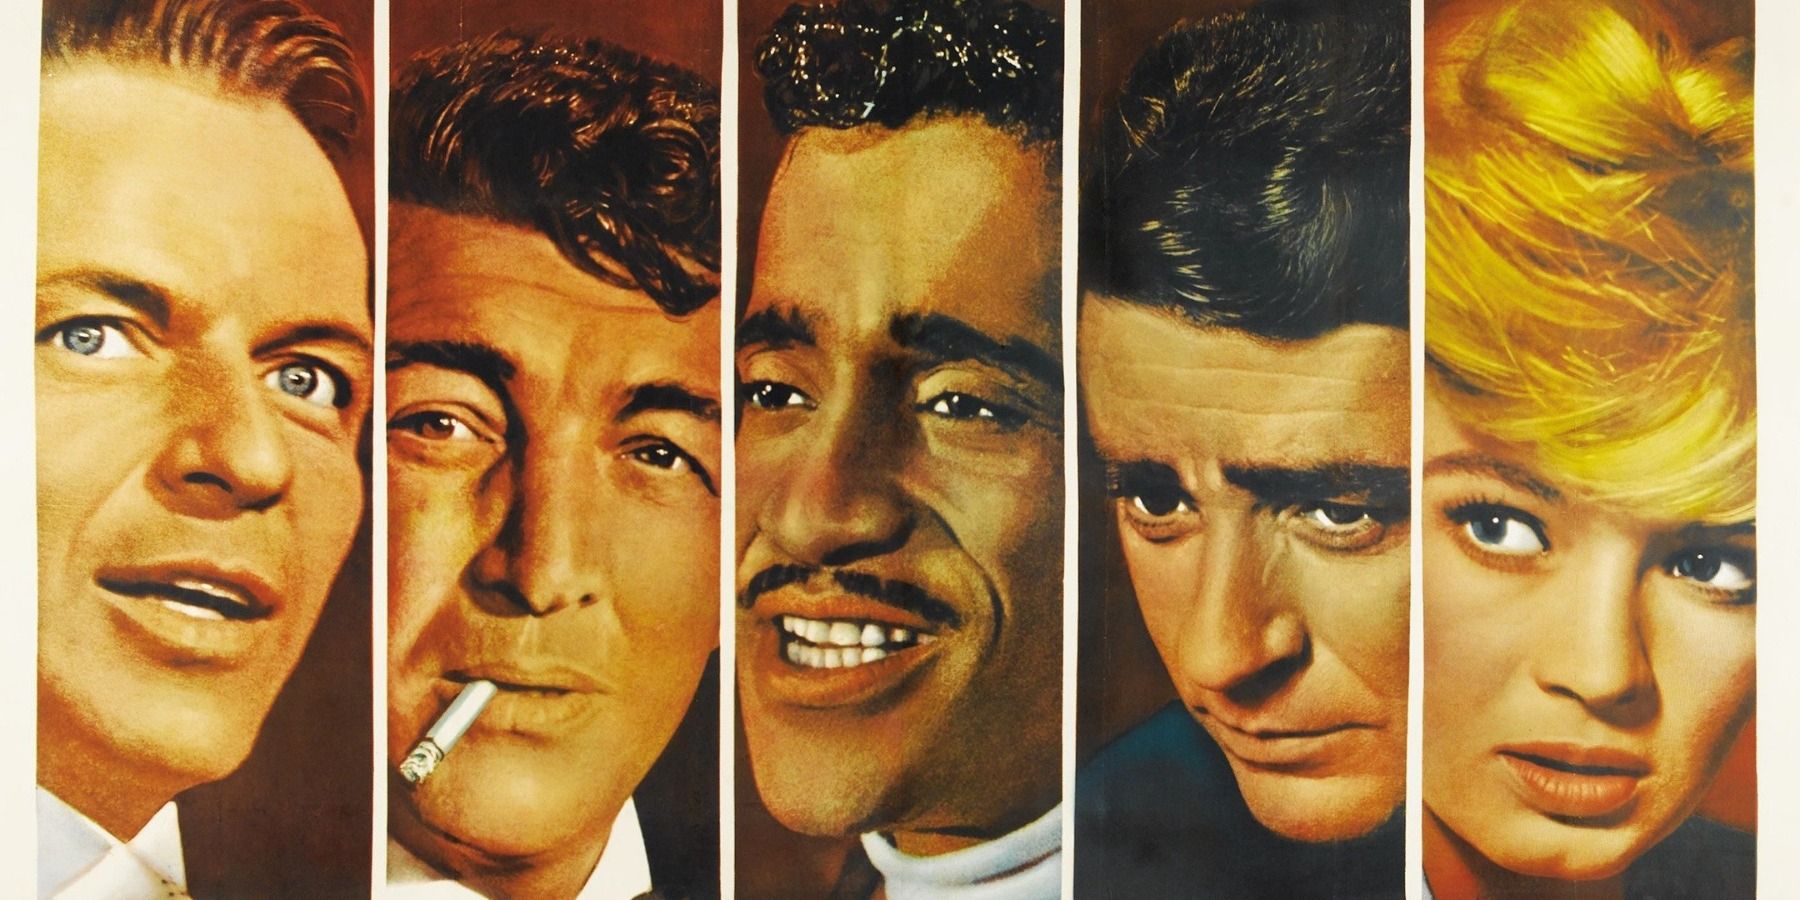 1960 Ocean's 11 poster with Frank Sinatra, Sammy Davis Jr. Angie Dickinson